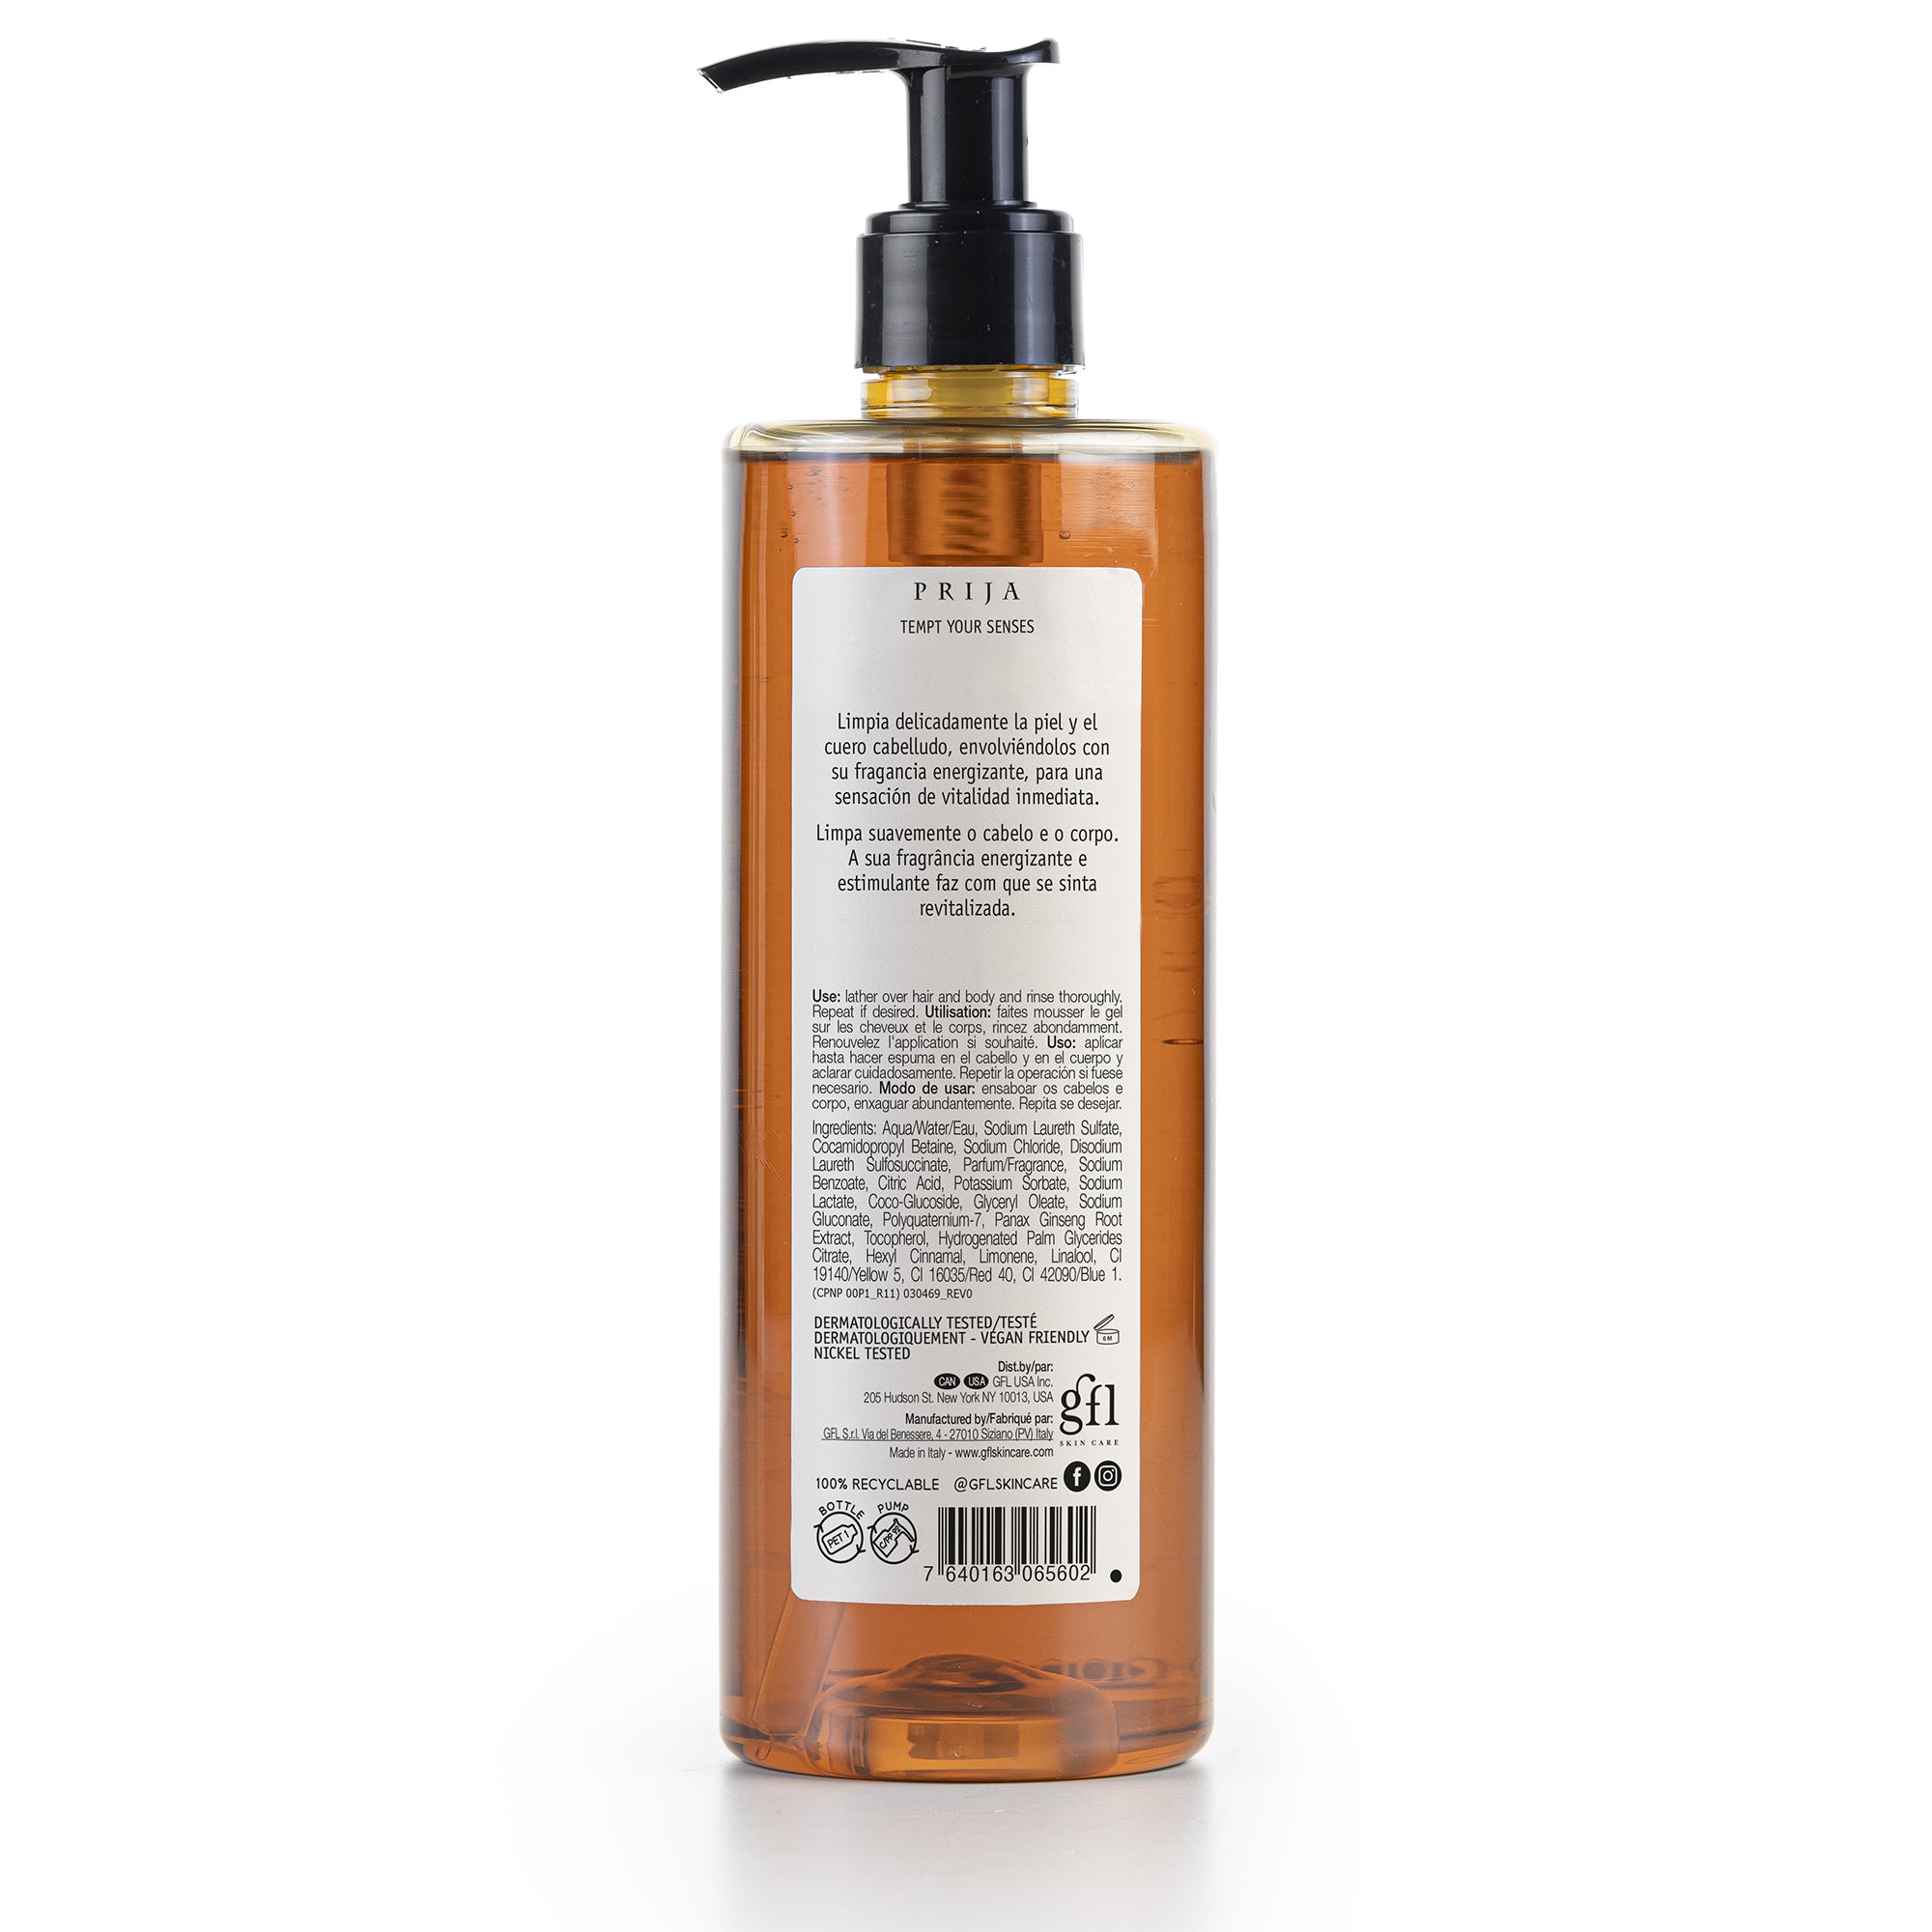 Prija Vitalizing Shower Gel And Shampoo (12.84 Fluid Ounce)